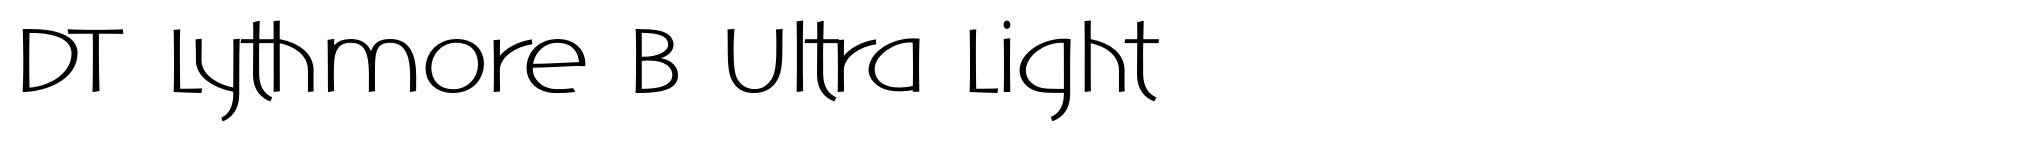 DT Lythmore B Ultra Light image